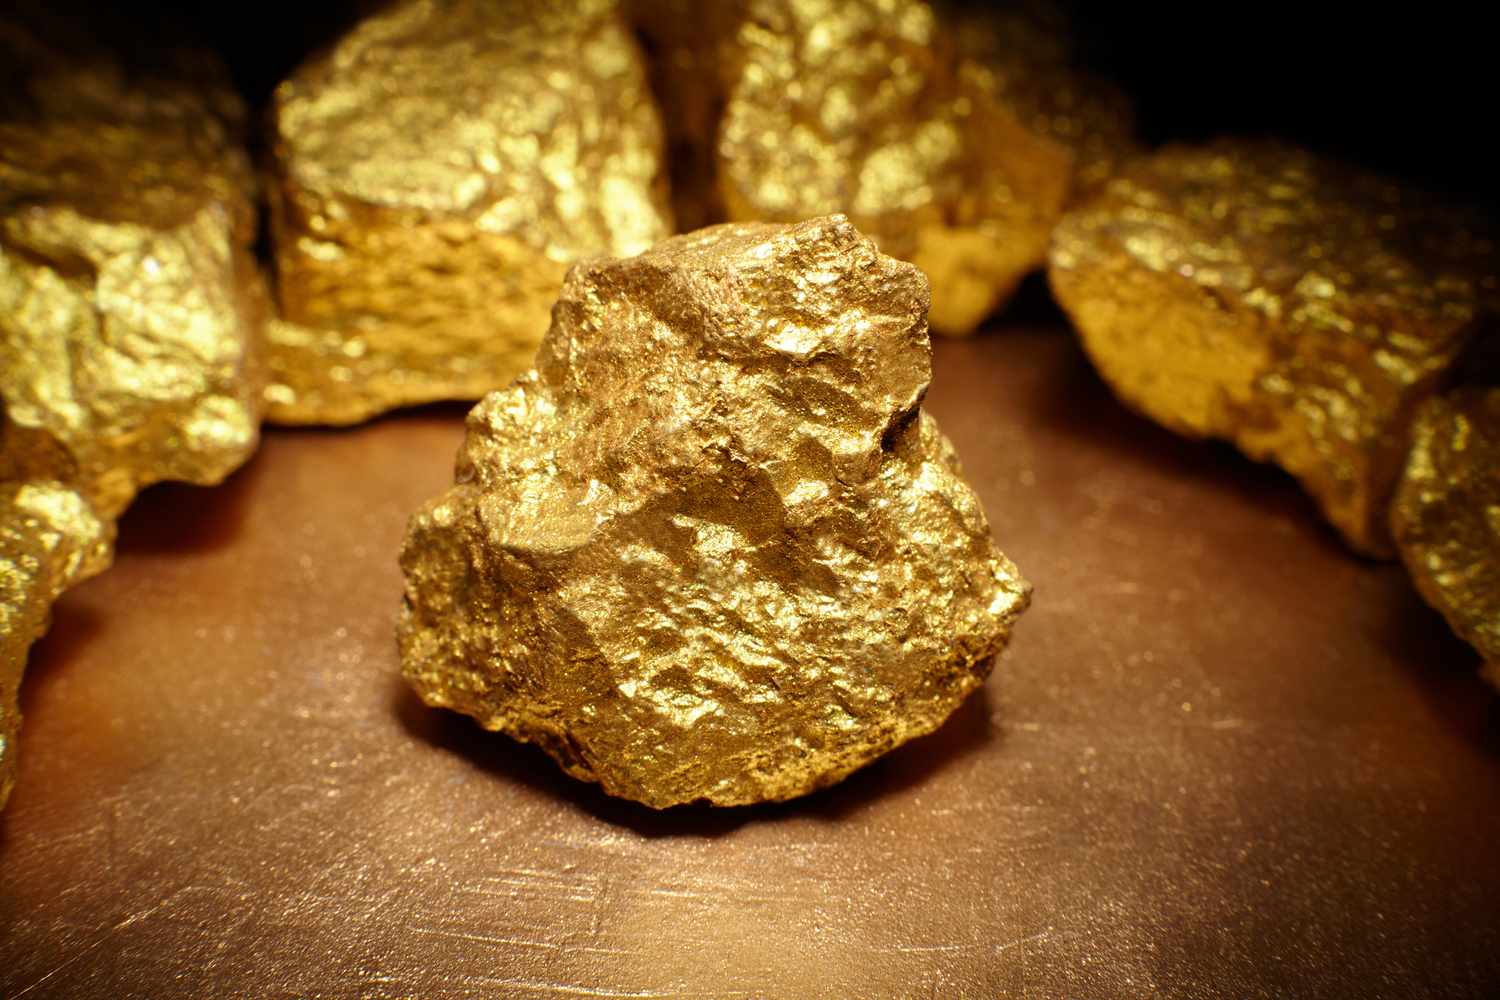 x3 - Financial Futurism - Gold falls sharply as U.S. dollar rises - DOW